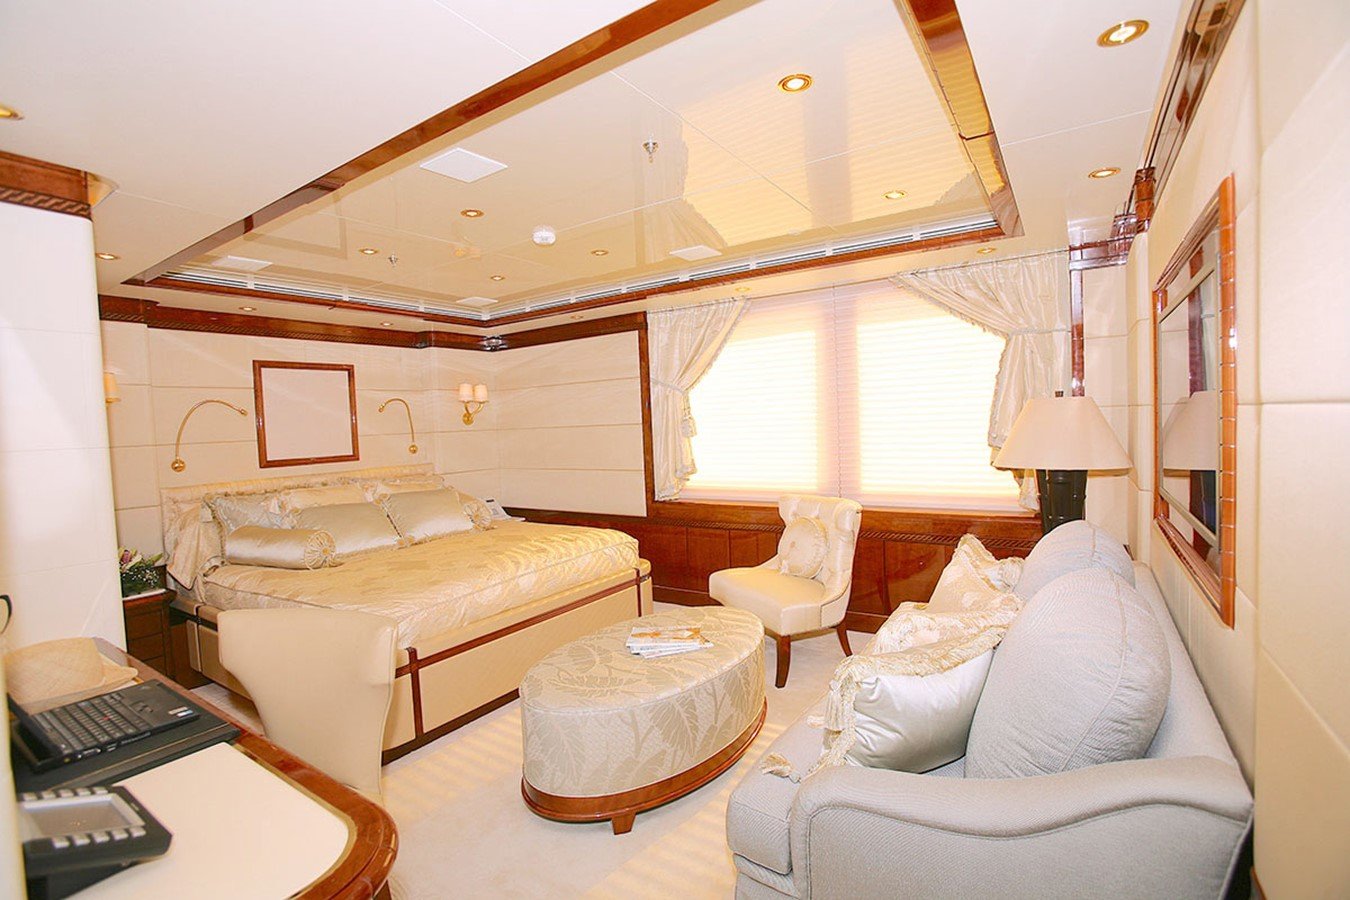 yacht Ambrosia interior